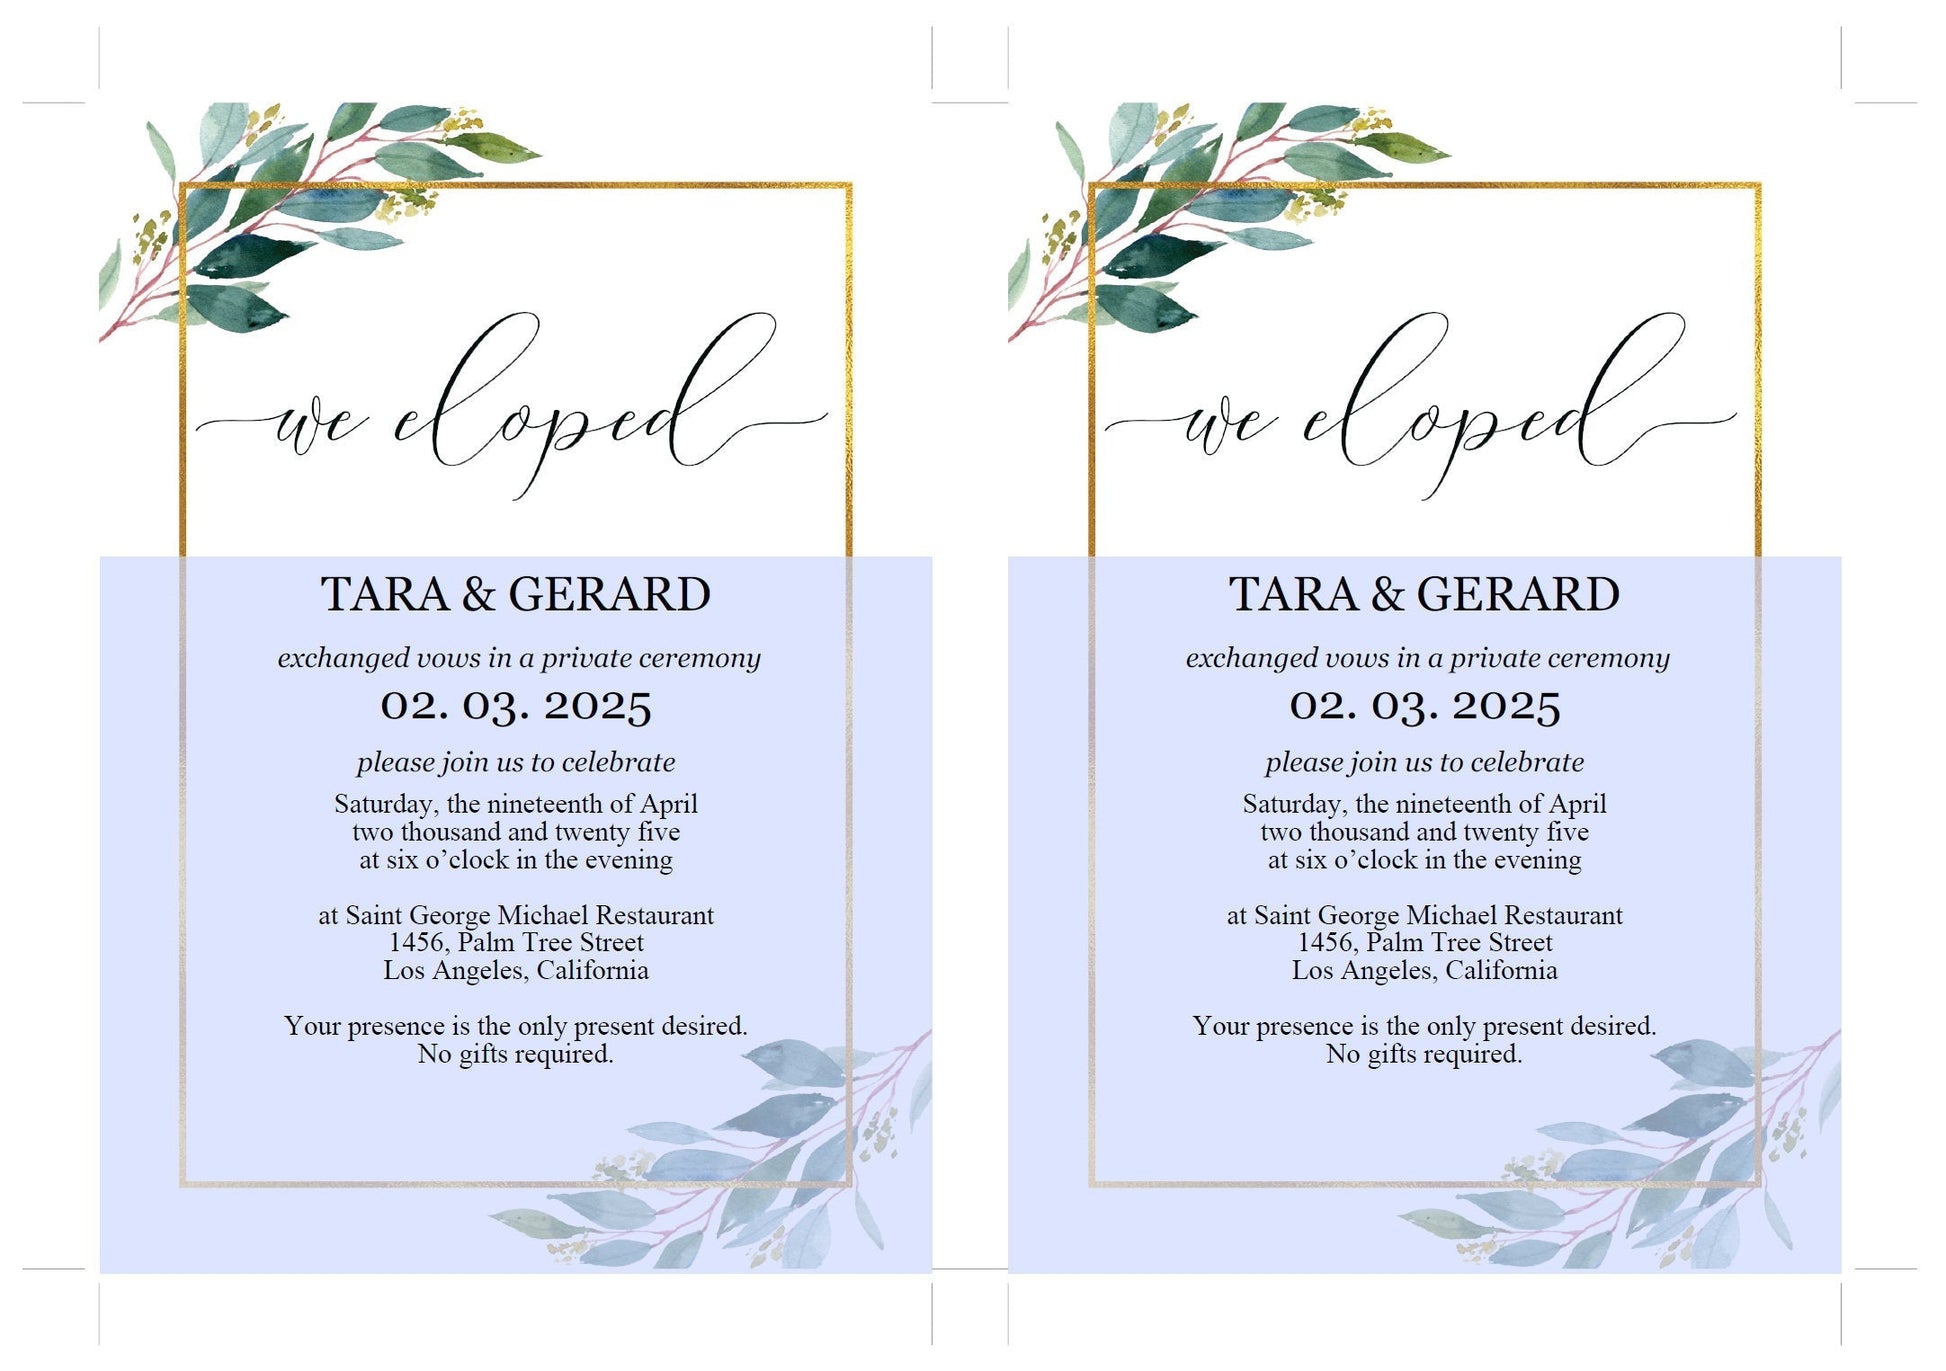 Elopement Wedding Invitation Template, Editable,Printable, Greenery, Wedding Announcement, we eloped, Gold, Geometric - Tara ELOPEMENT SAVVY PAPER CO